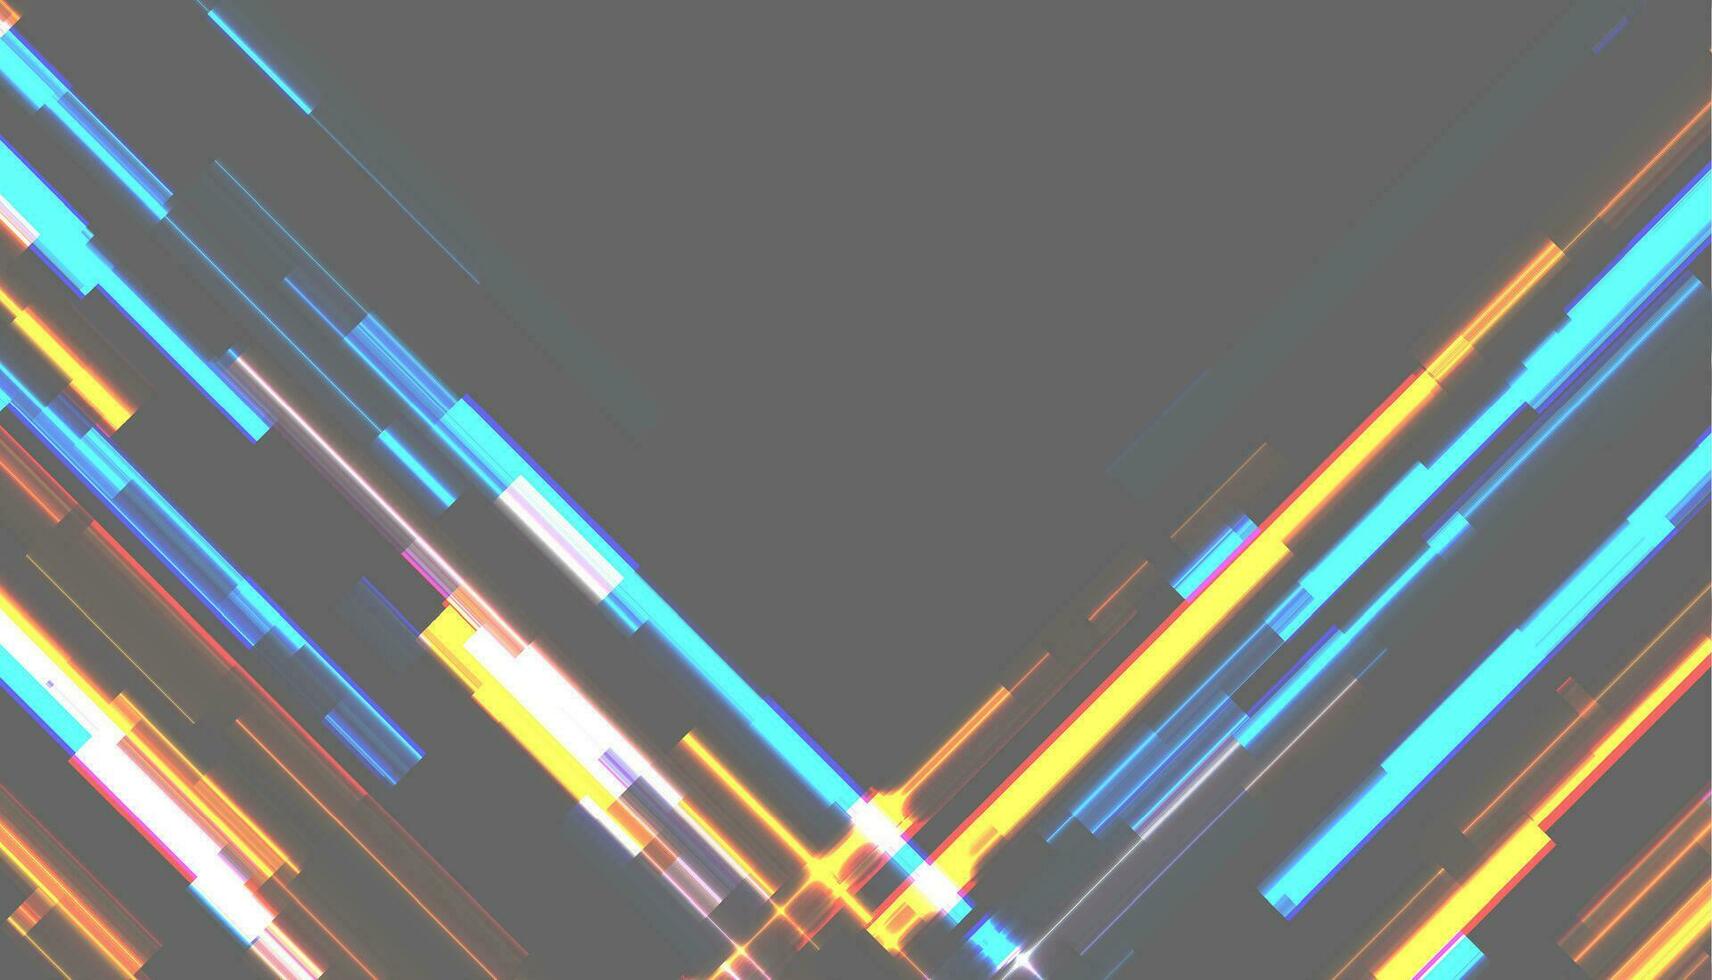 abstract tech gloeiend neon lijnen vector achtergrond met glitch effect